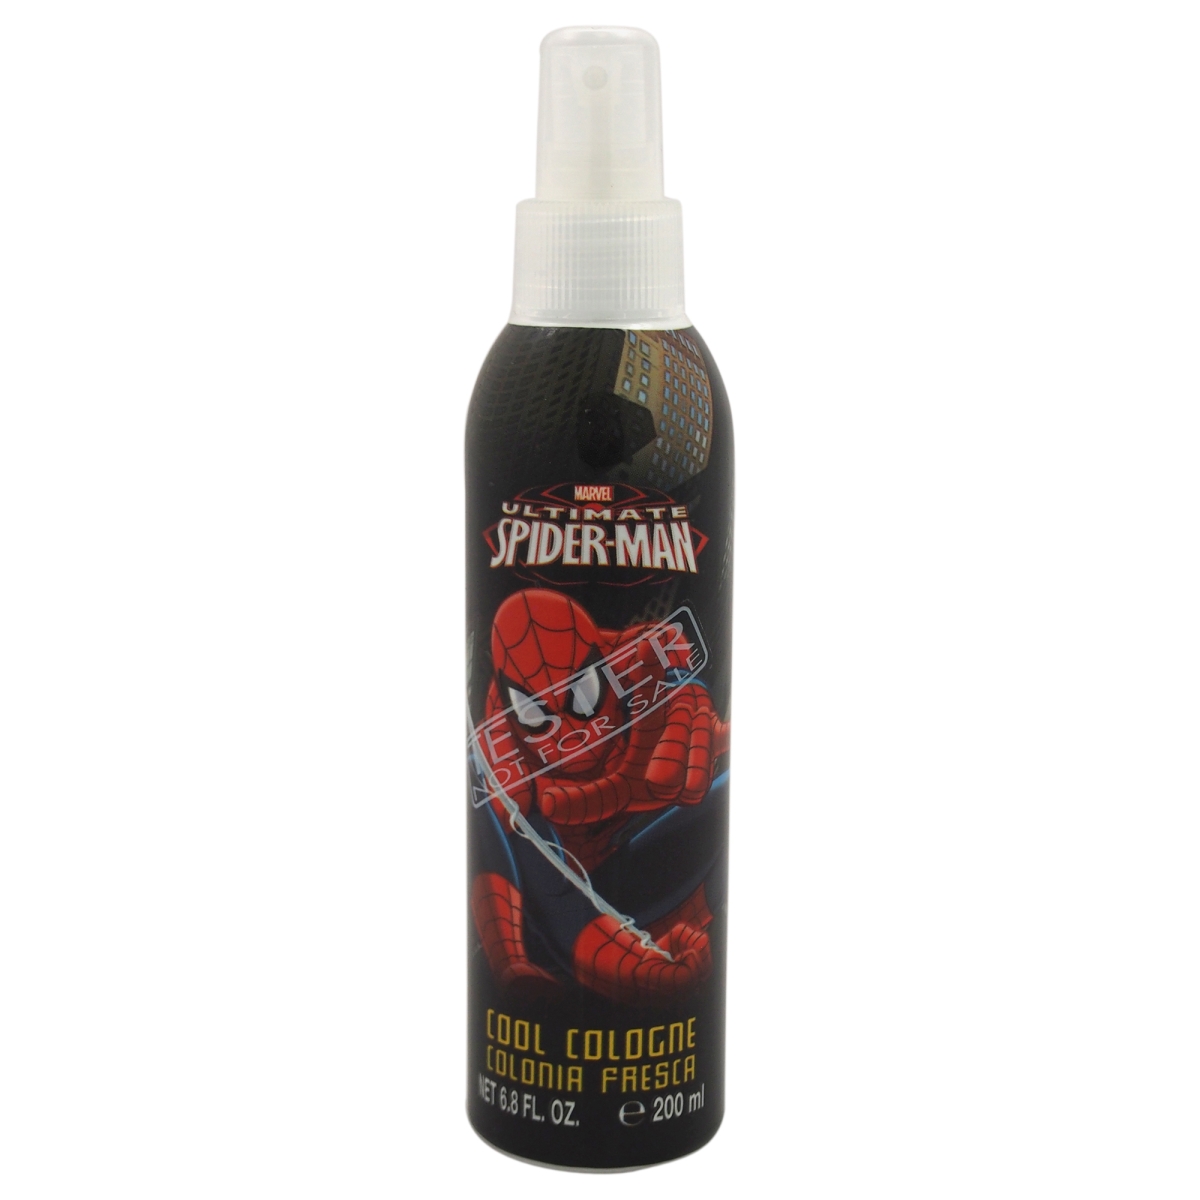 K-bb-1067 6.8 Oz Ultimate Spider Man Cool Cologne Body Spray For Kids